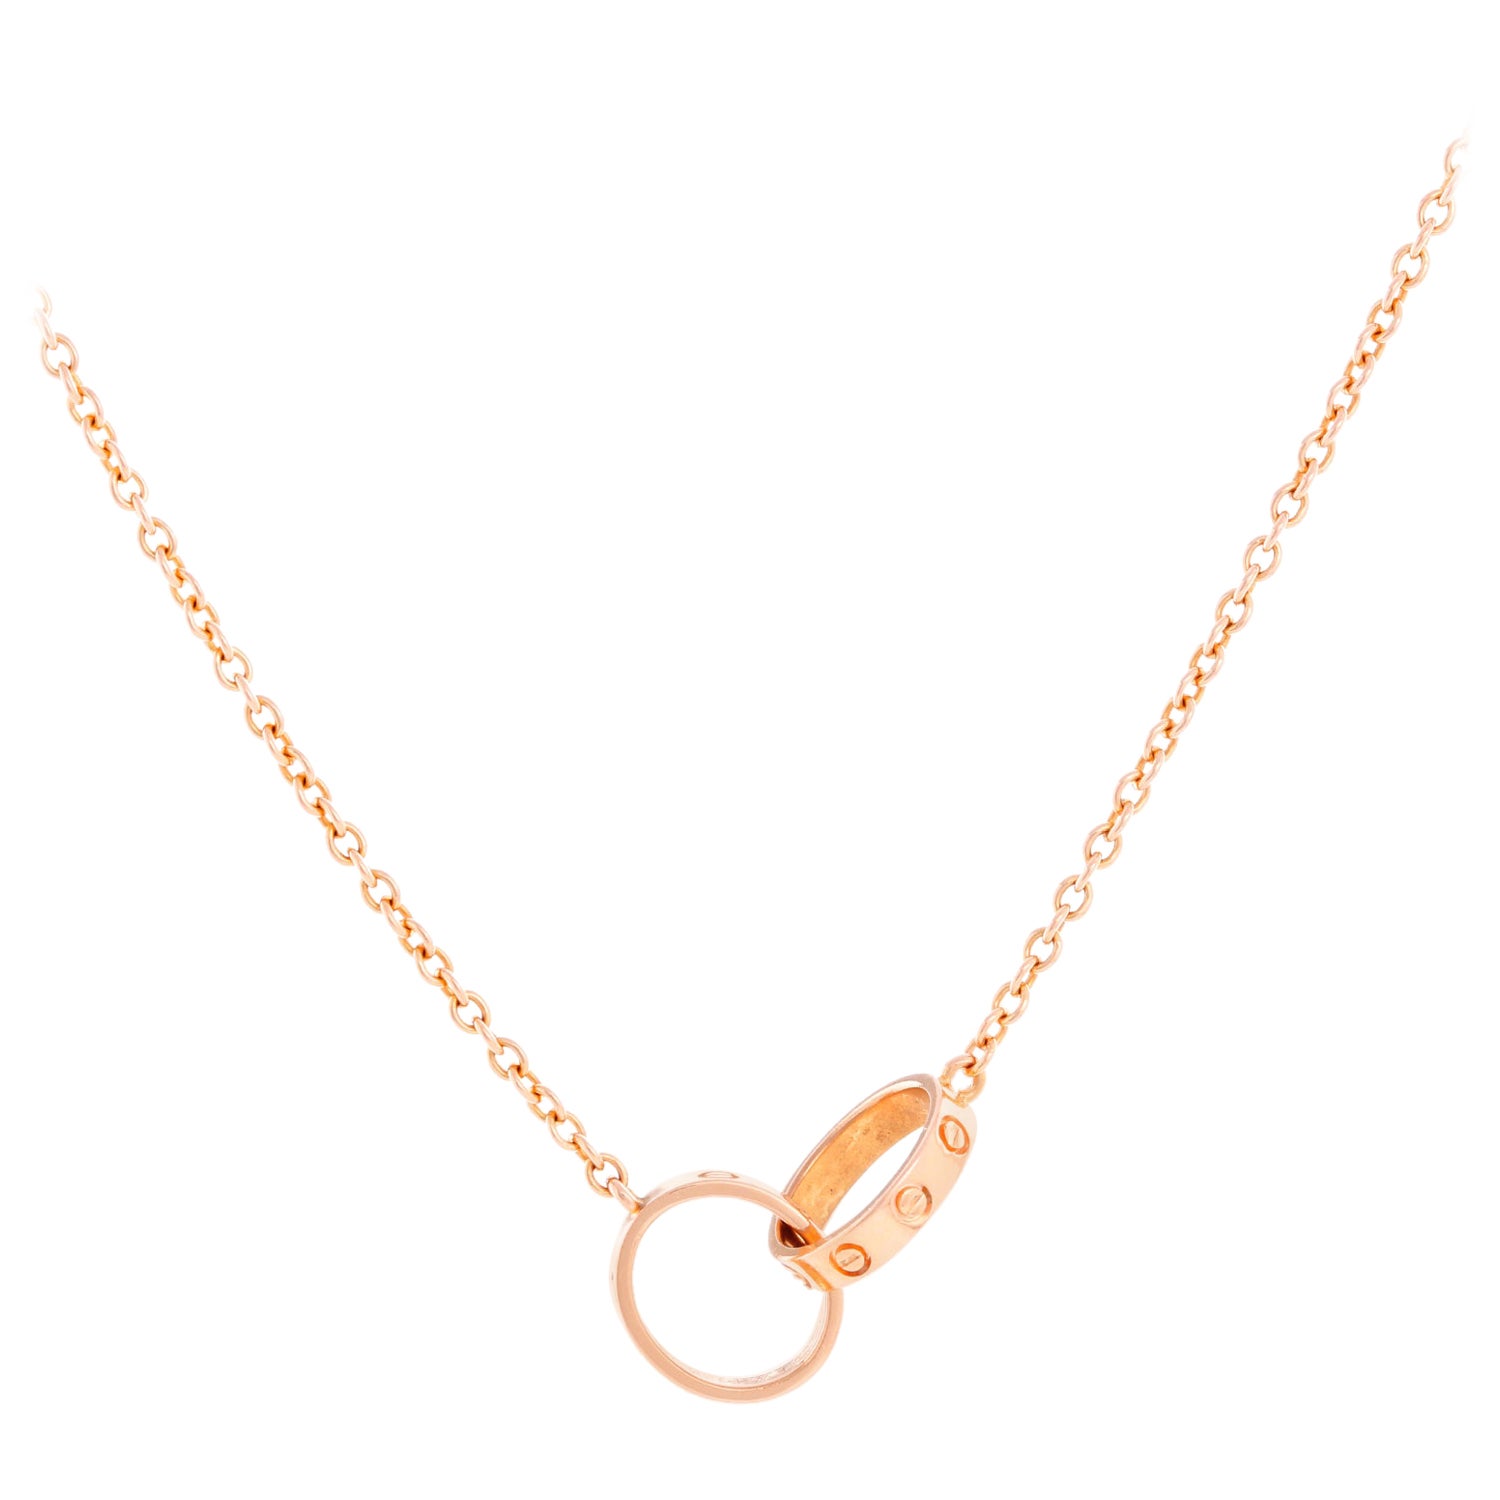 Cartier Love Interlocking 18k Rose Gold Necklace For Sale At 1stdibs